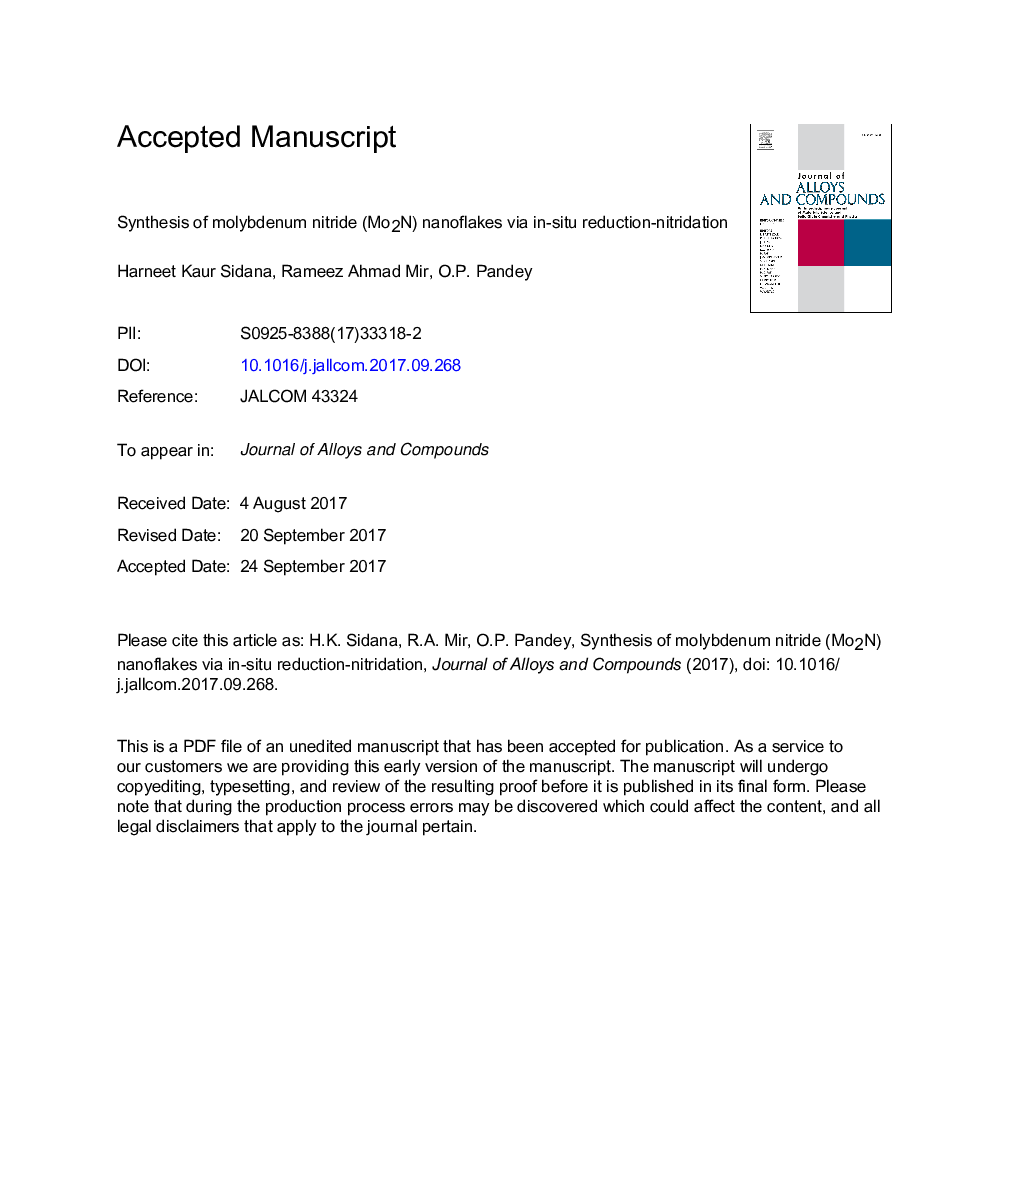 Synthesis of molybdenum nitride (Mo2N) nanoflakes via in-situ reduction-nitridation